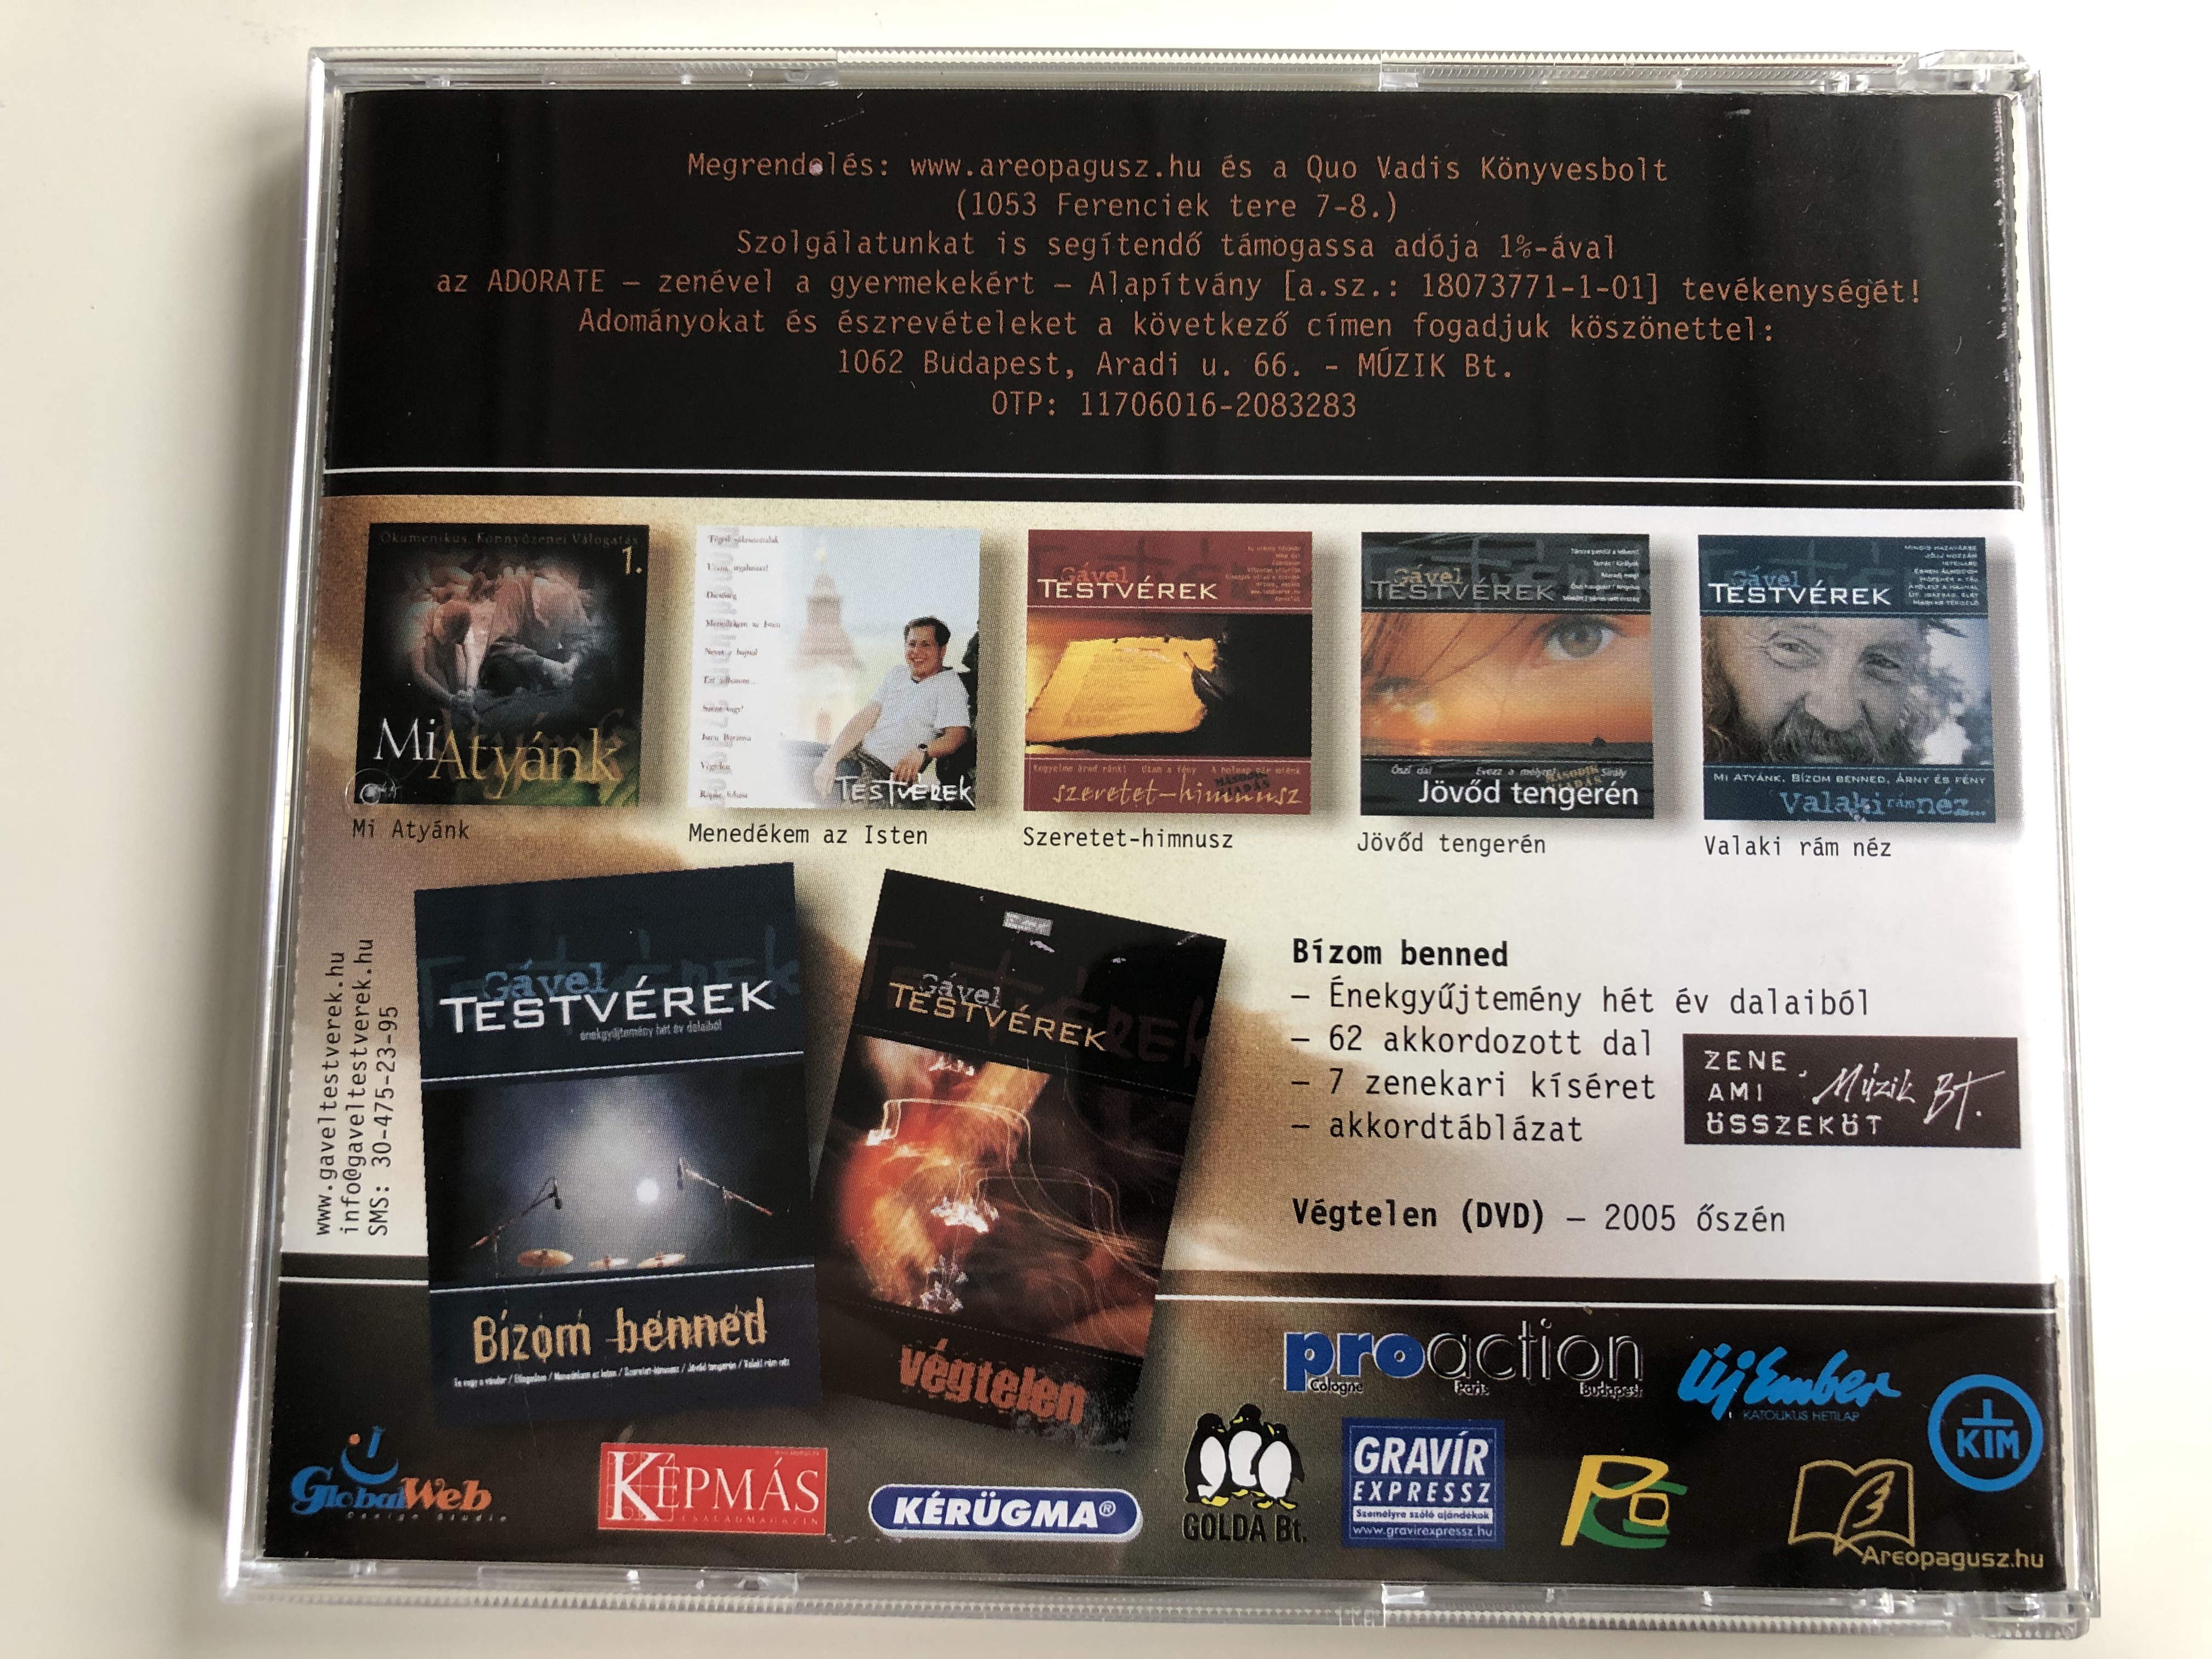 gavel-testverek-elo-koncert-az-elo-kenyerrol-vegetelen-papp-laszlo-budapest-sportarena-2004-muzik-bt.-audio-cd-2005-mzk-06-6-.jpg